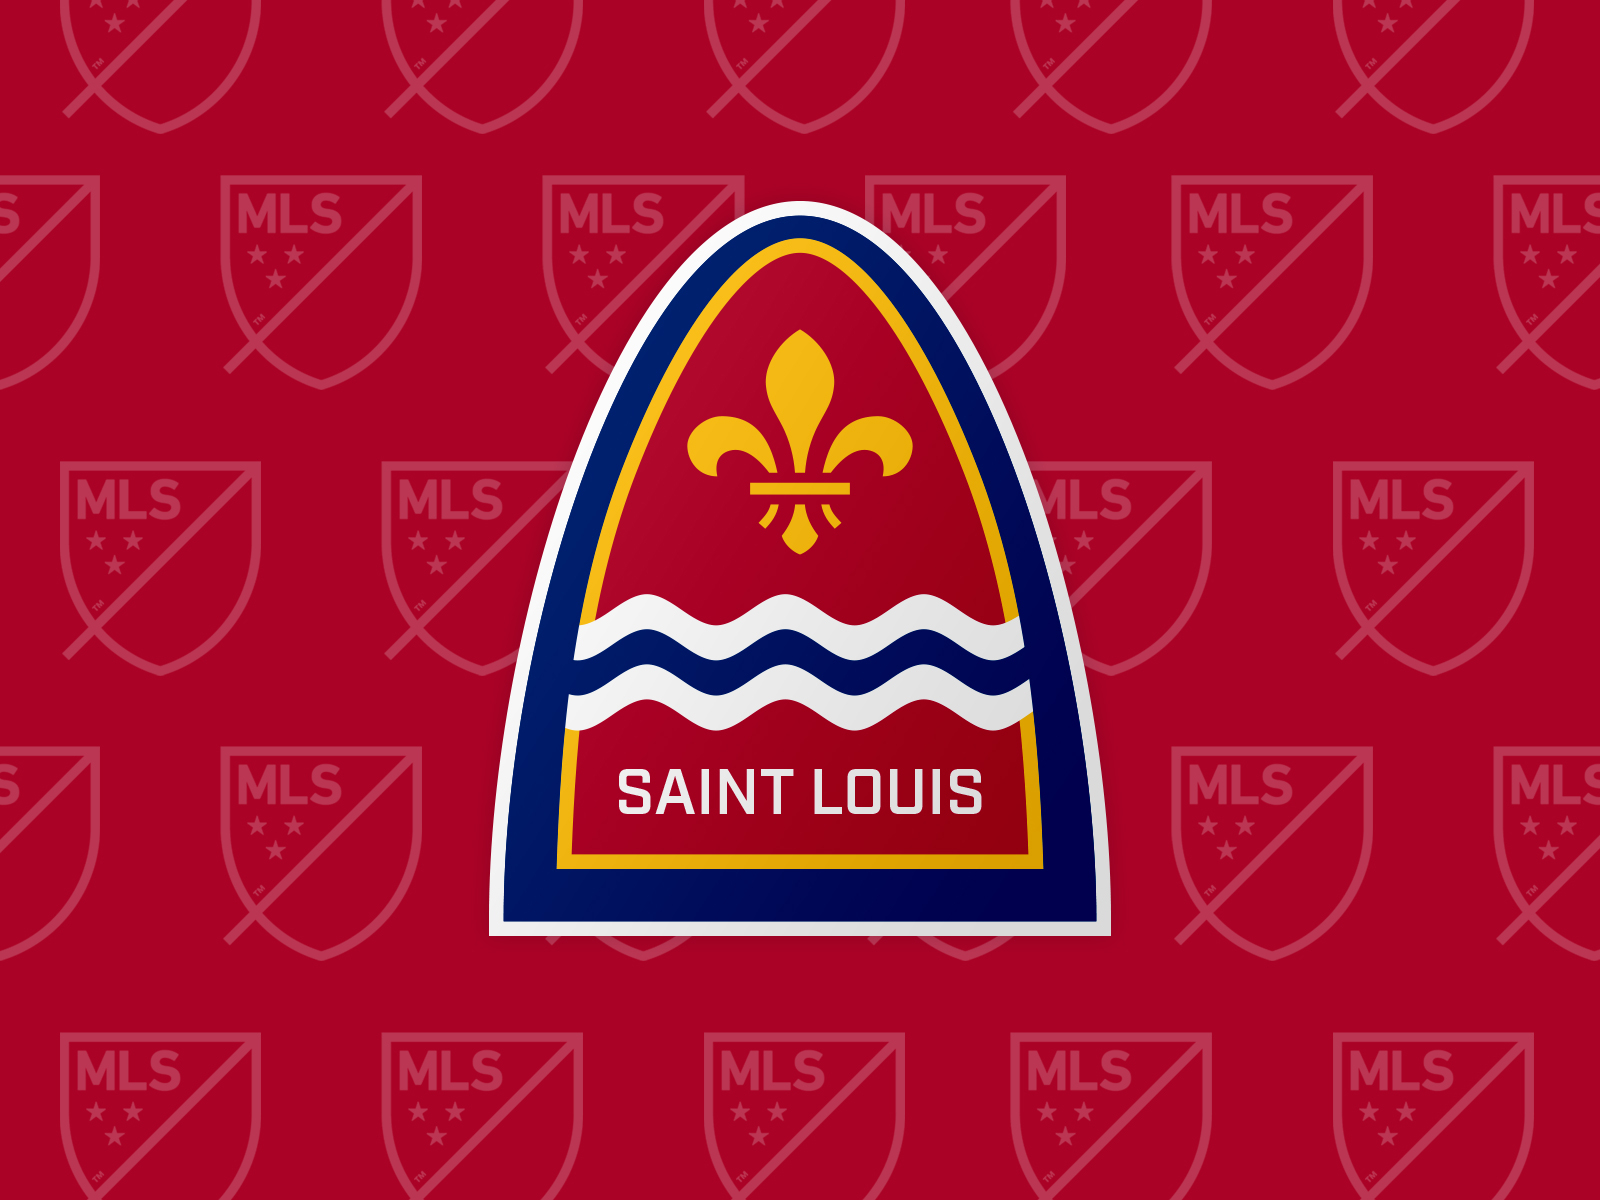 St. Louis MLS Club Announces Team Name, Crest